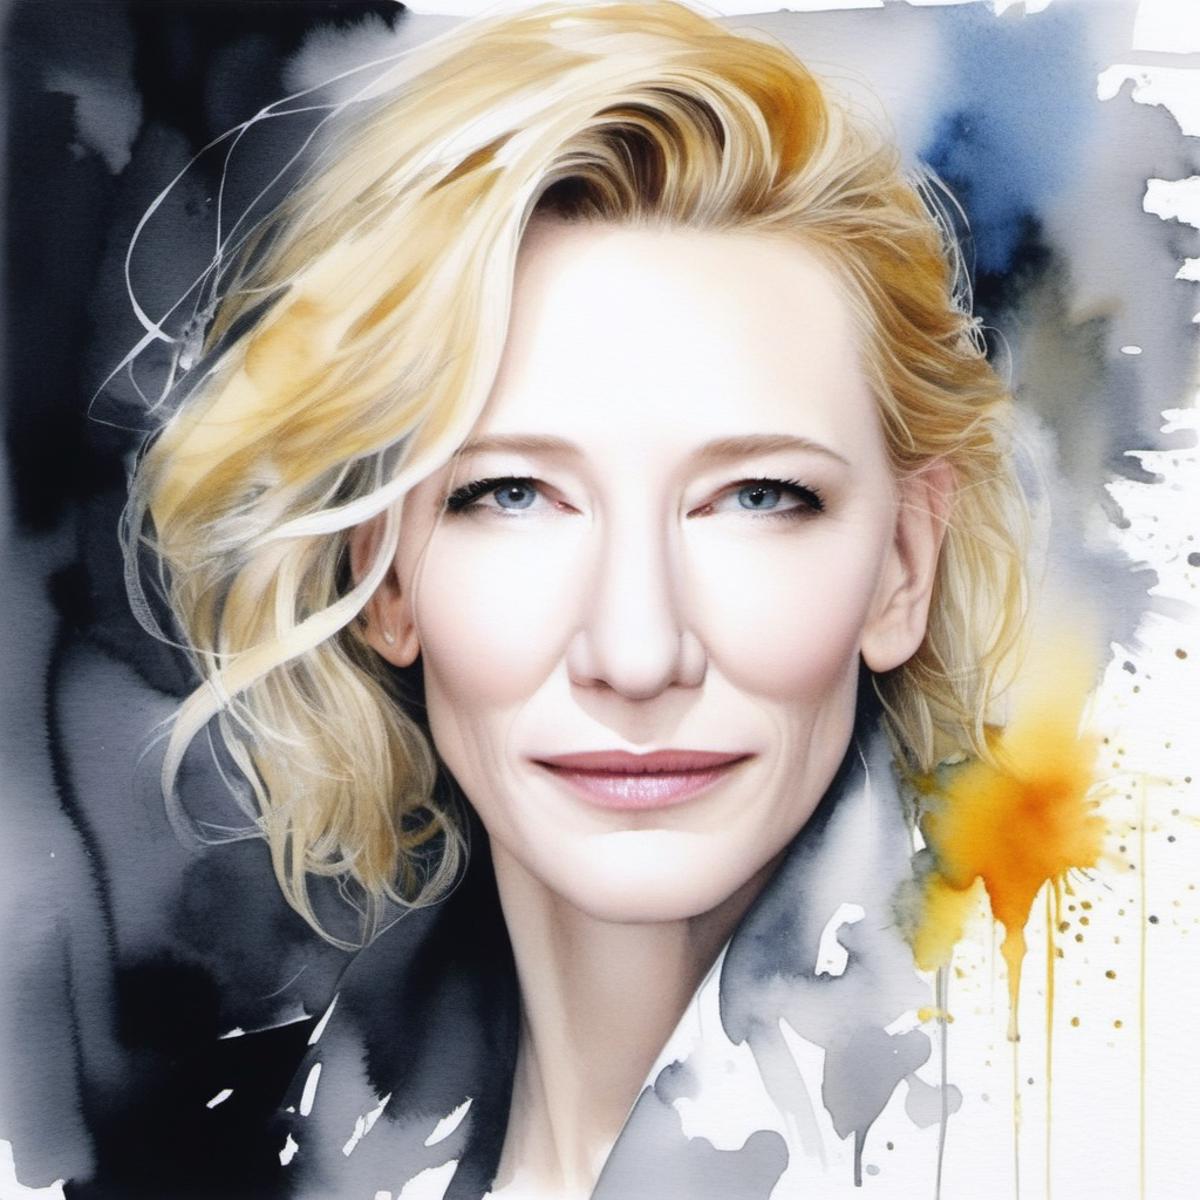 Cate Blanchett XL - Older image by ultimateballoon880